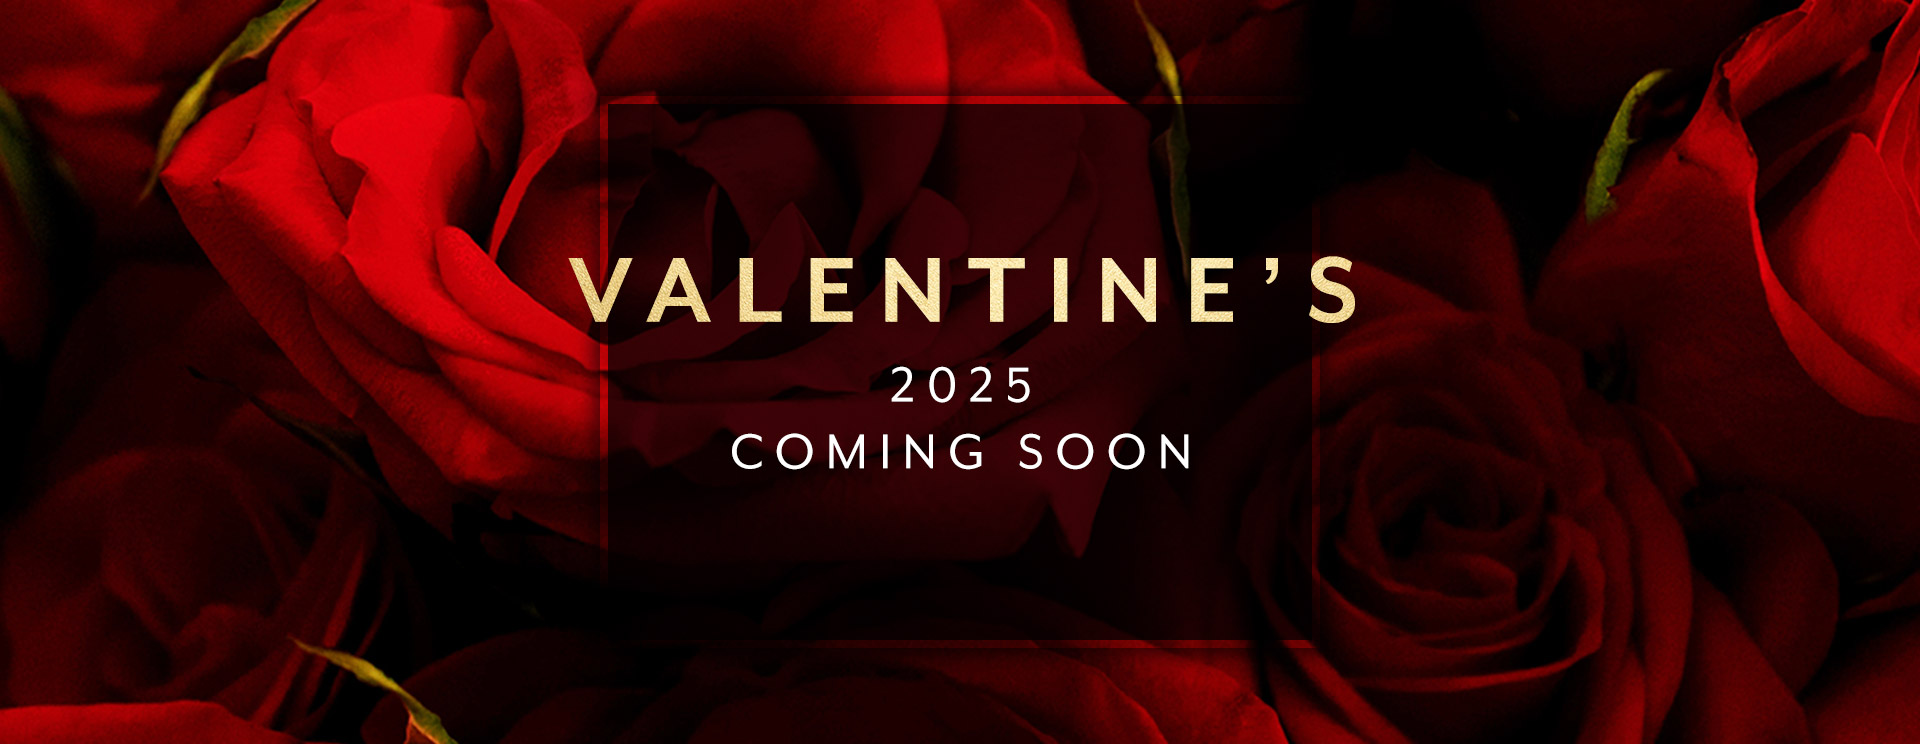 pcp-2025-valentines-holding-banner.jpg